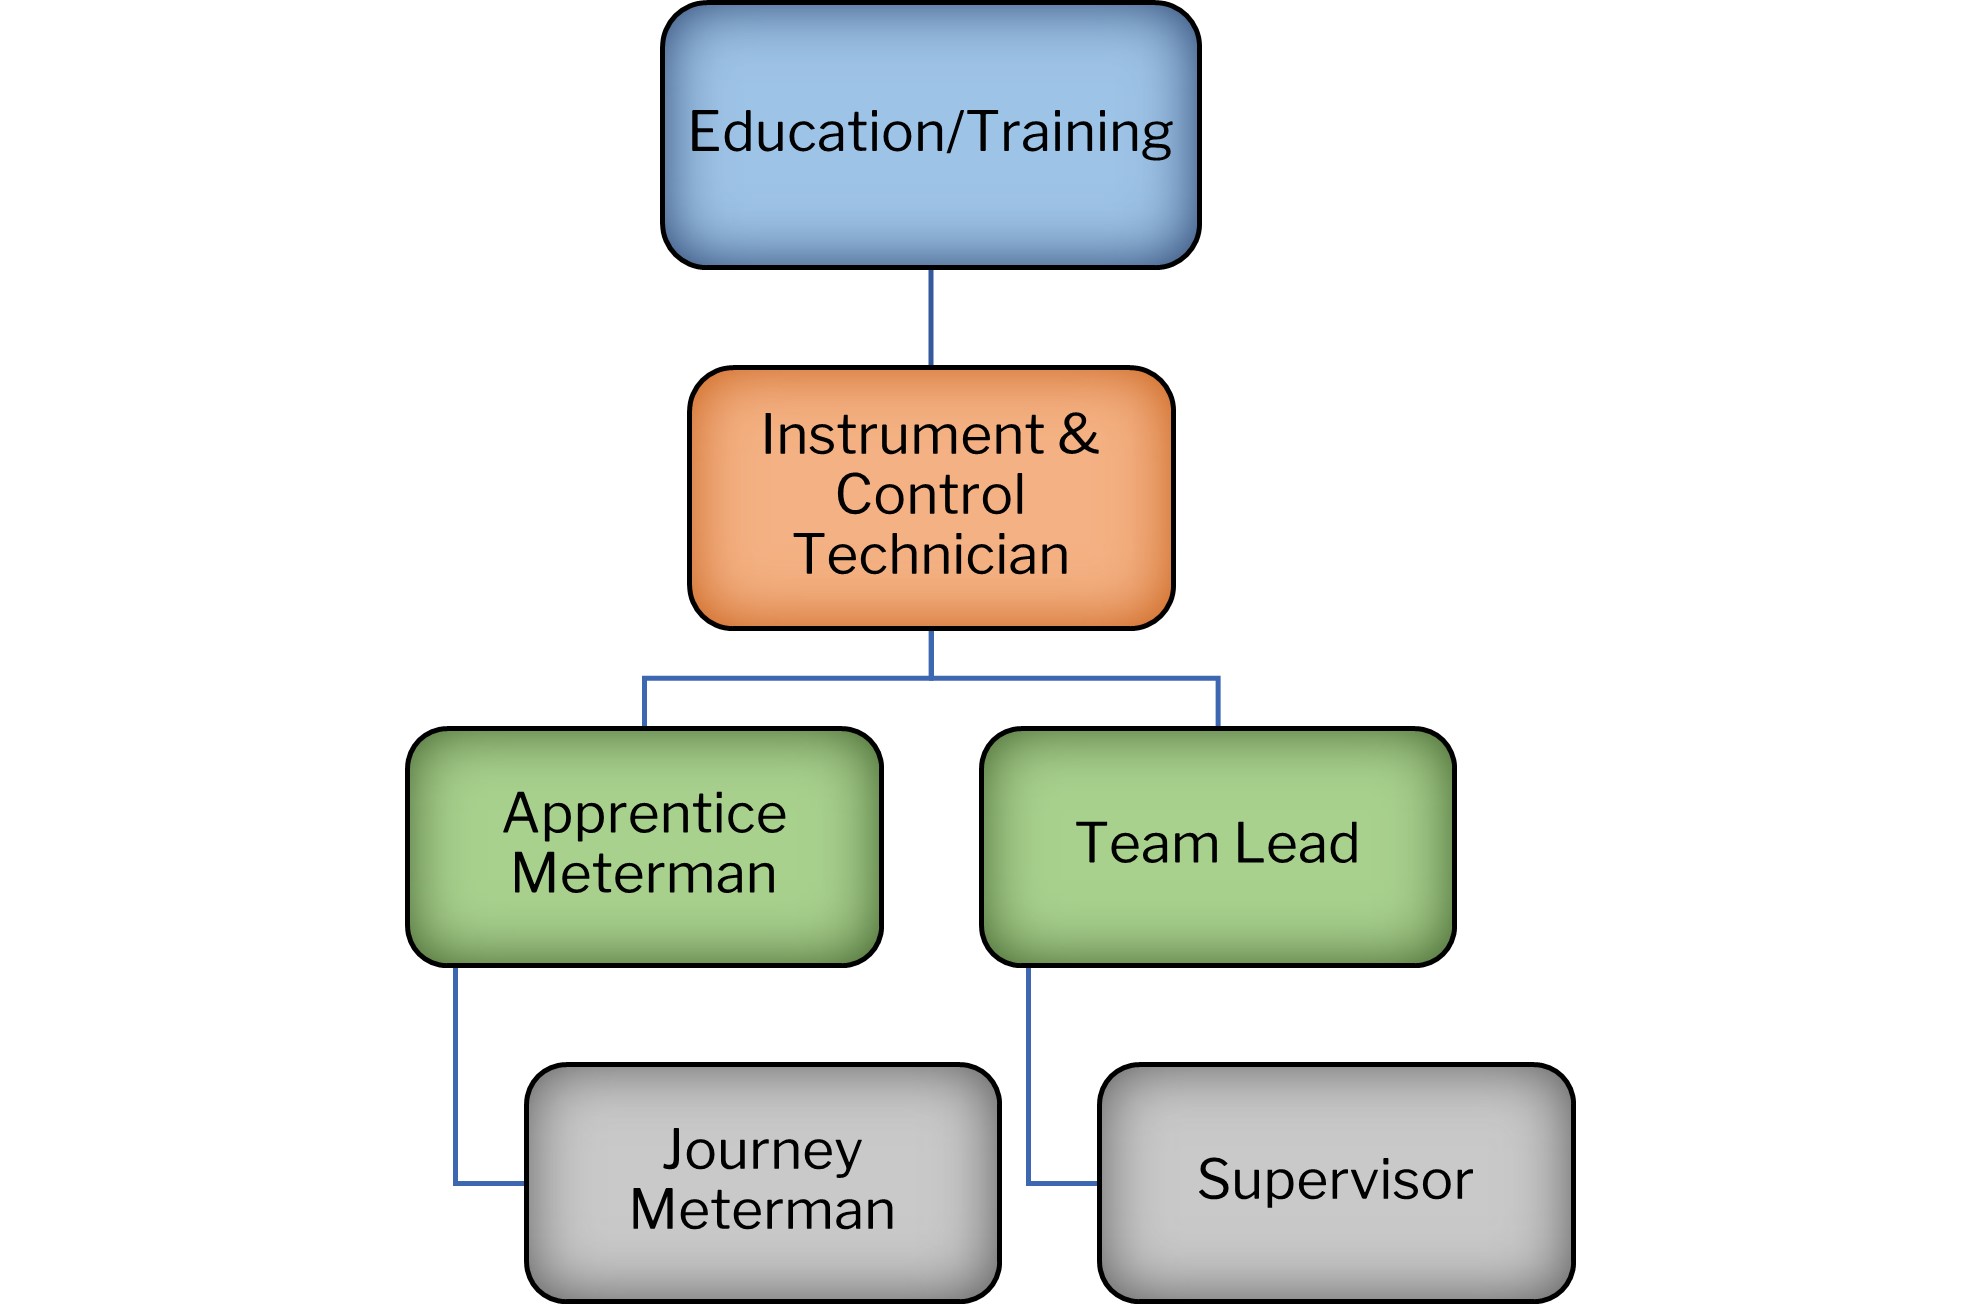 Chemical Engineer career path